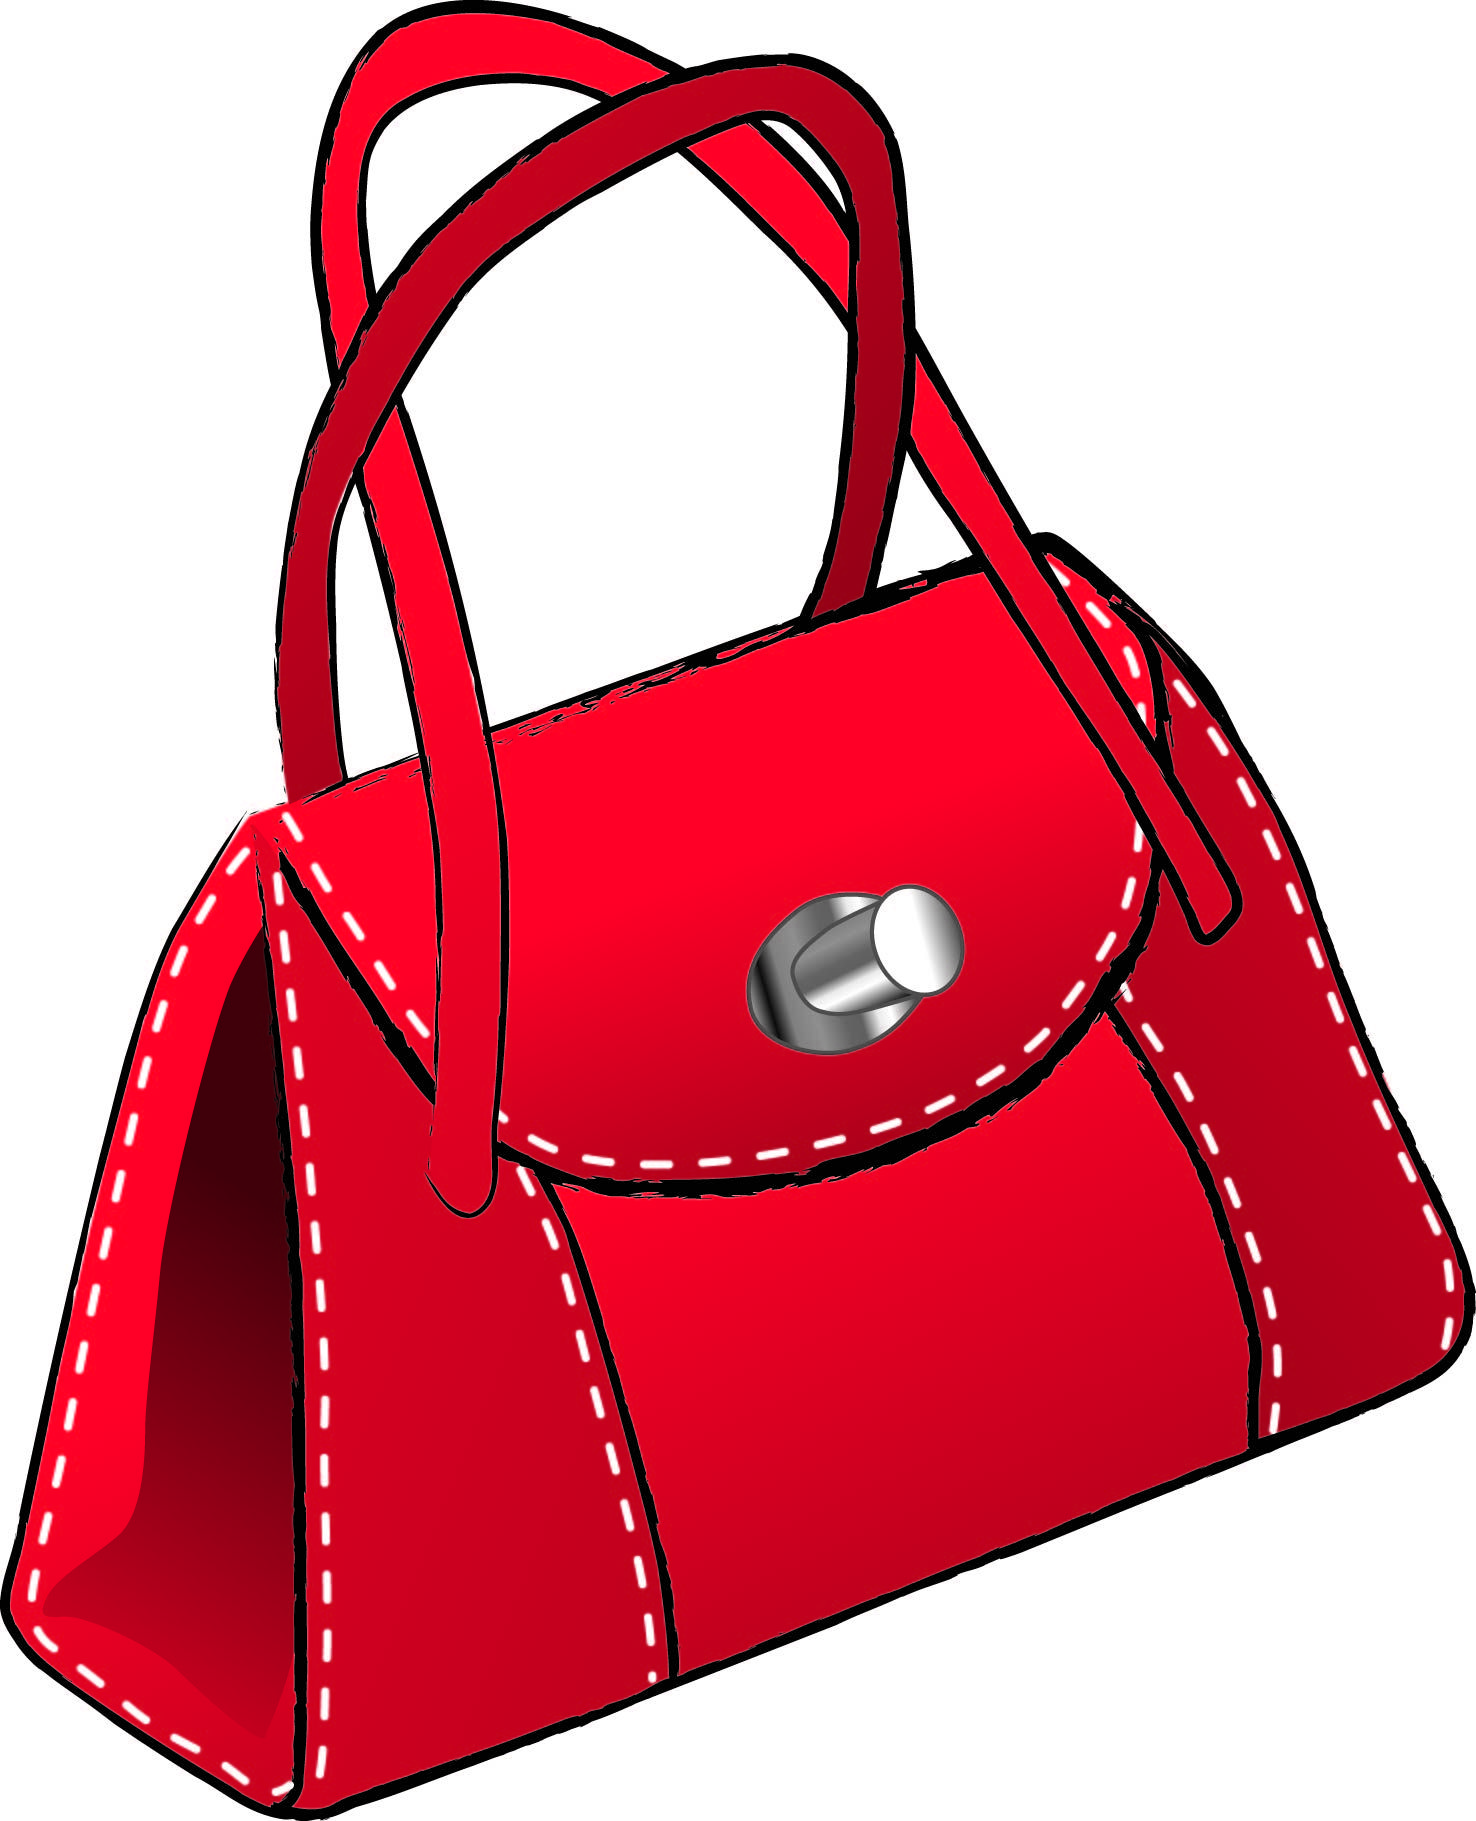 Handbag PNG Transparent Images - PNG All